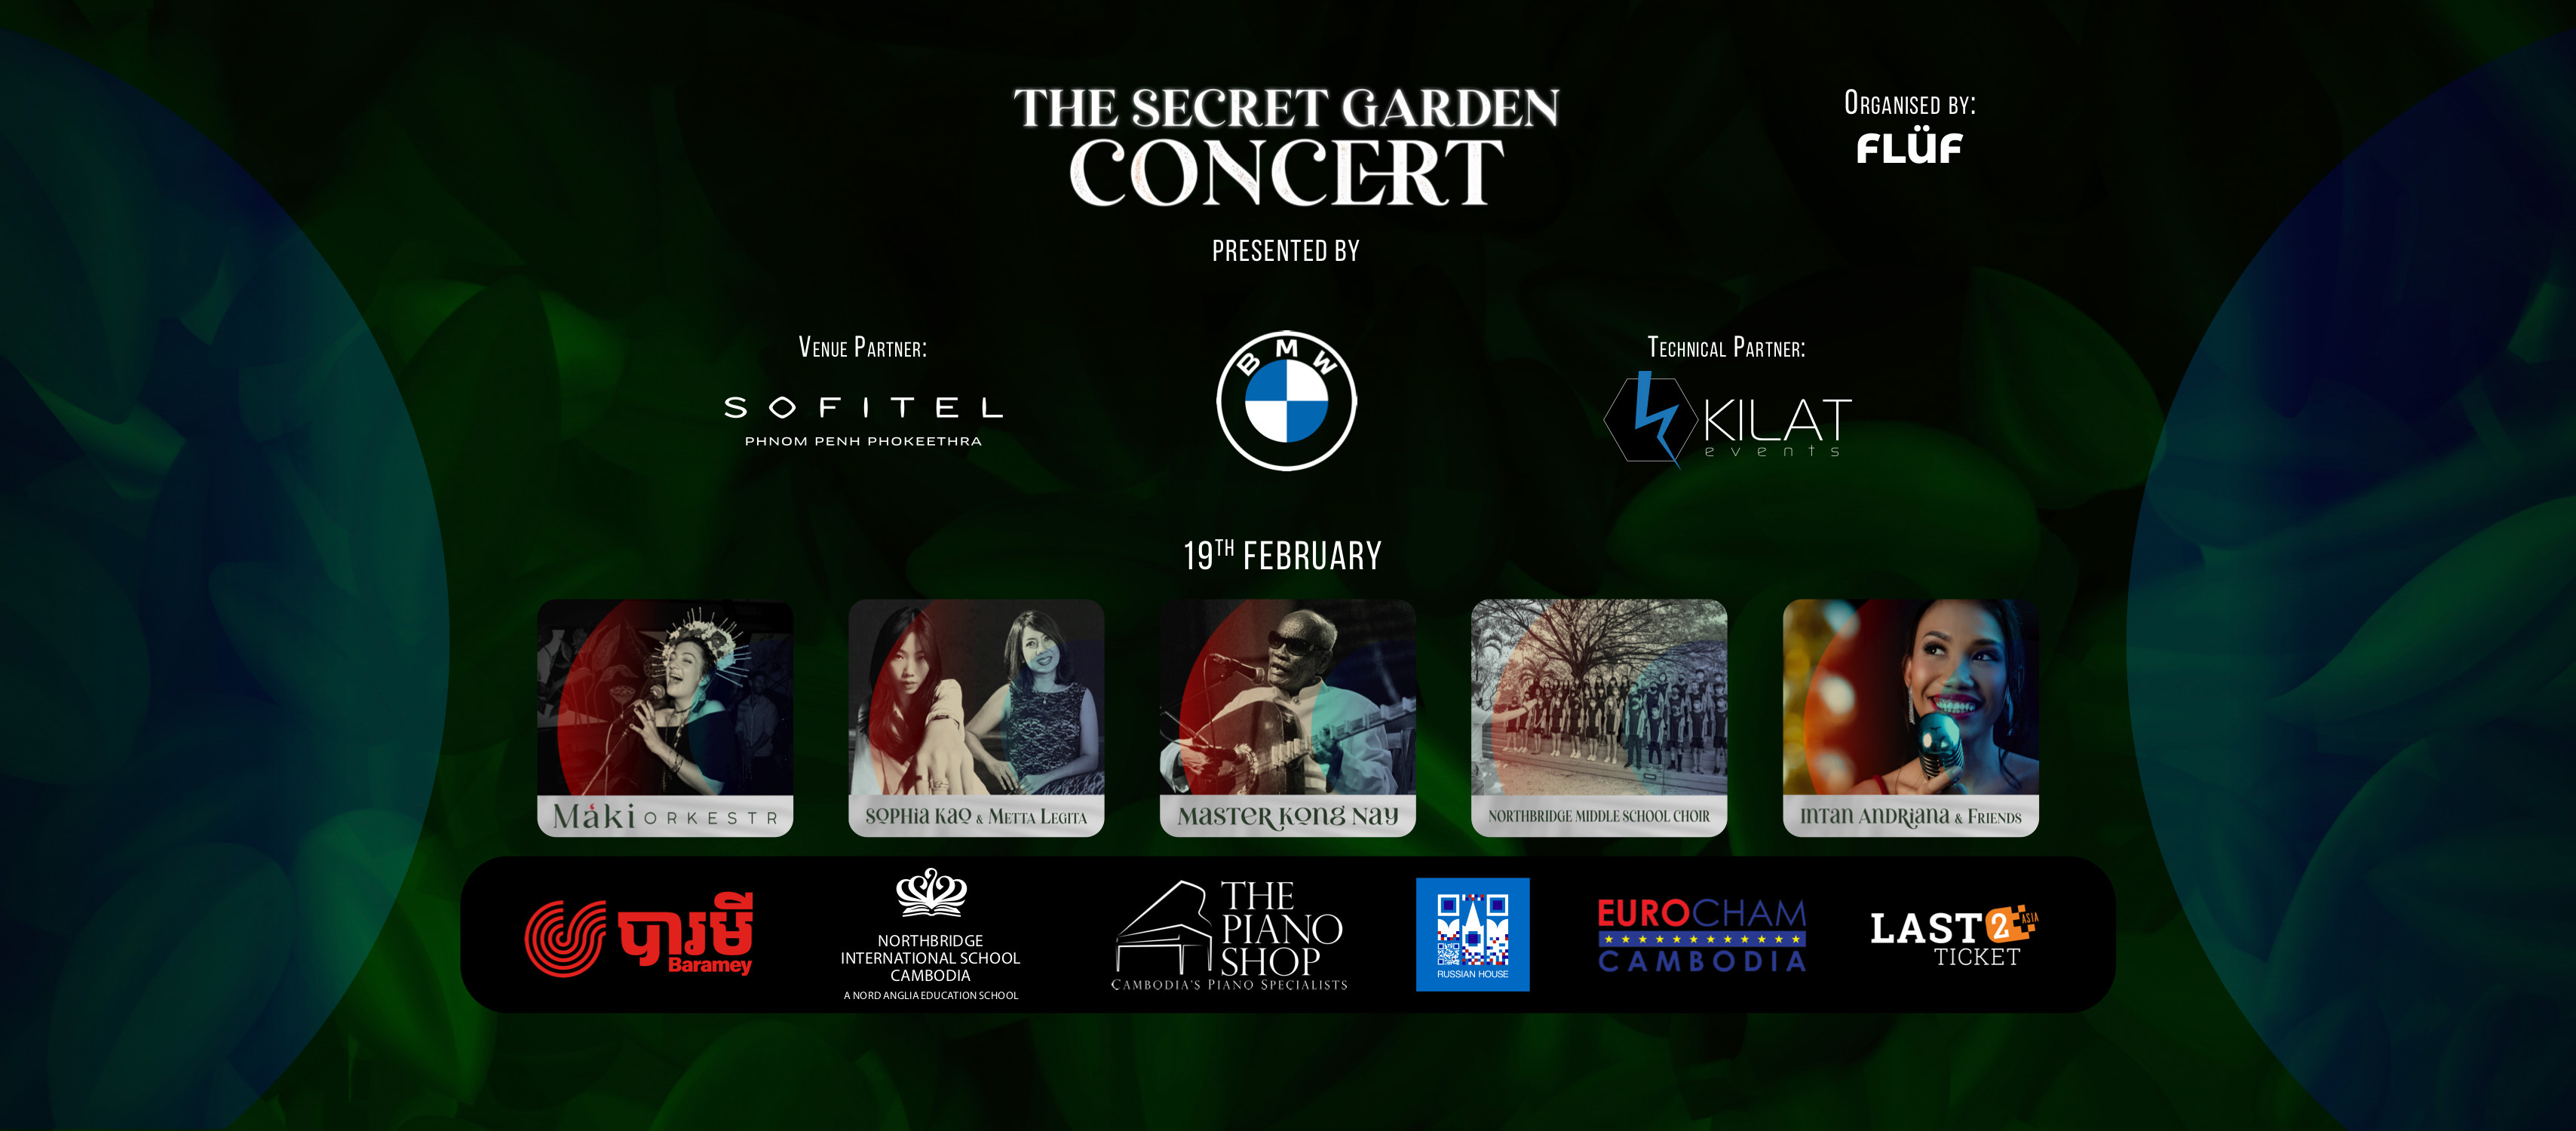 The Secret Garden Concert